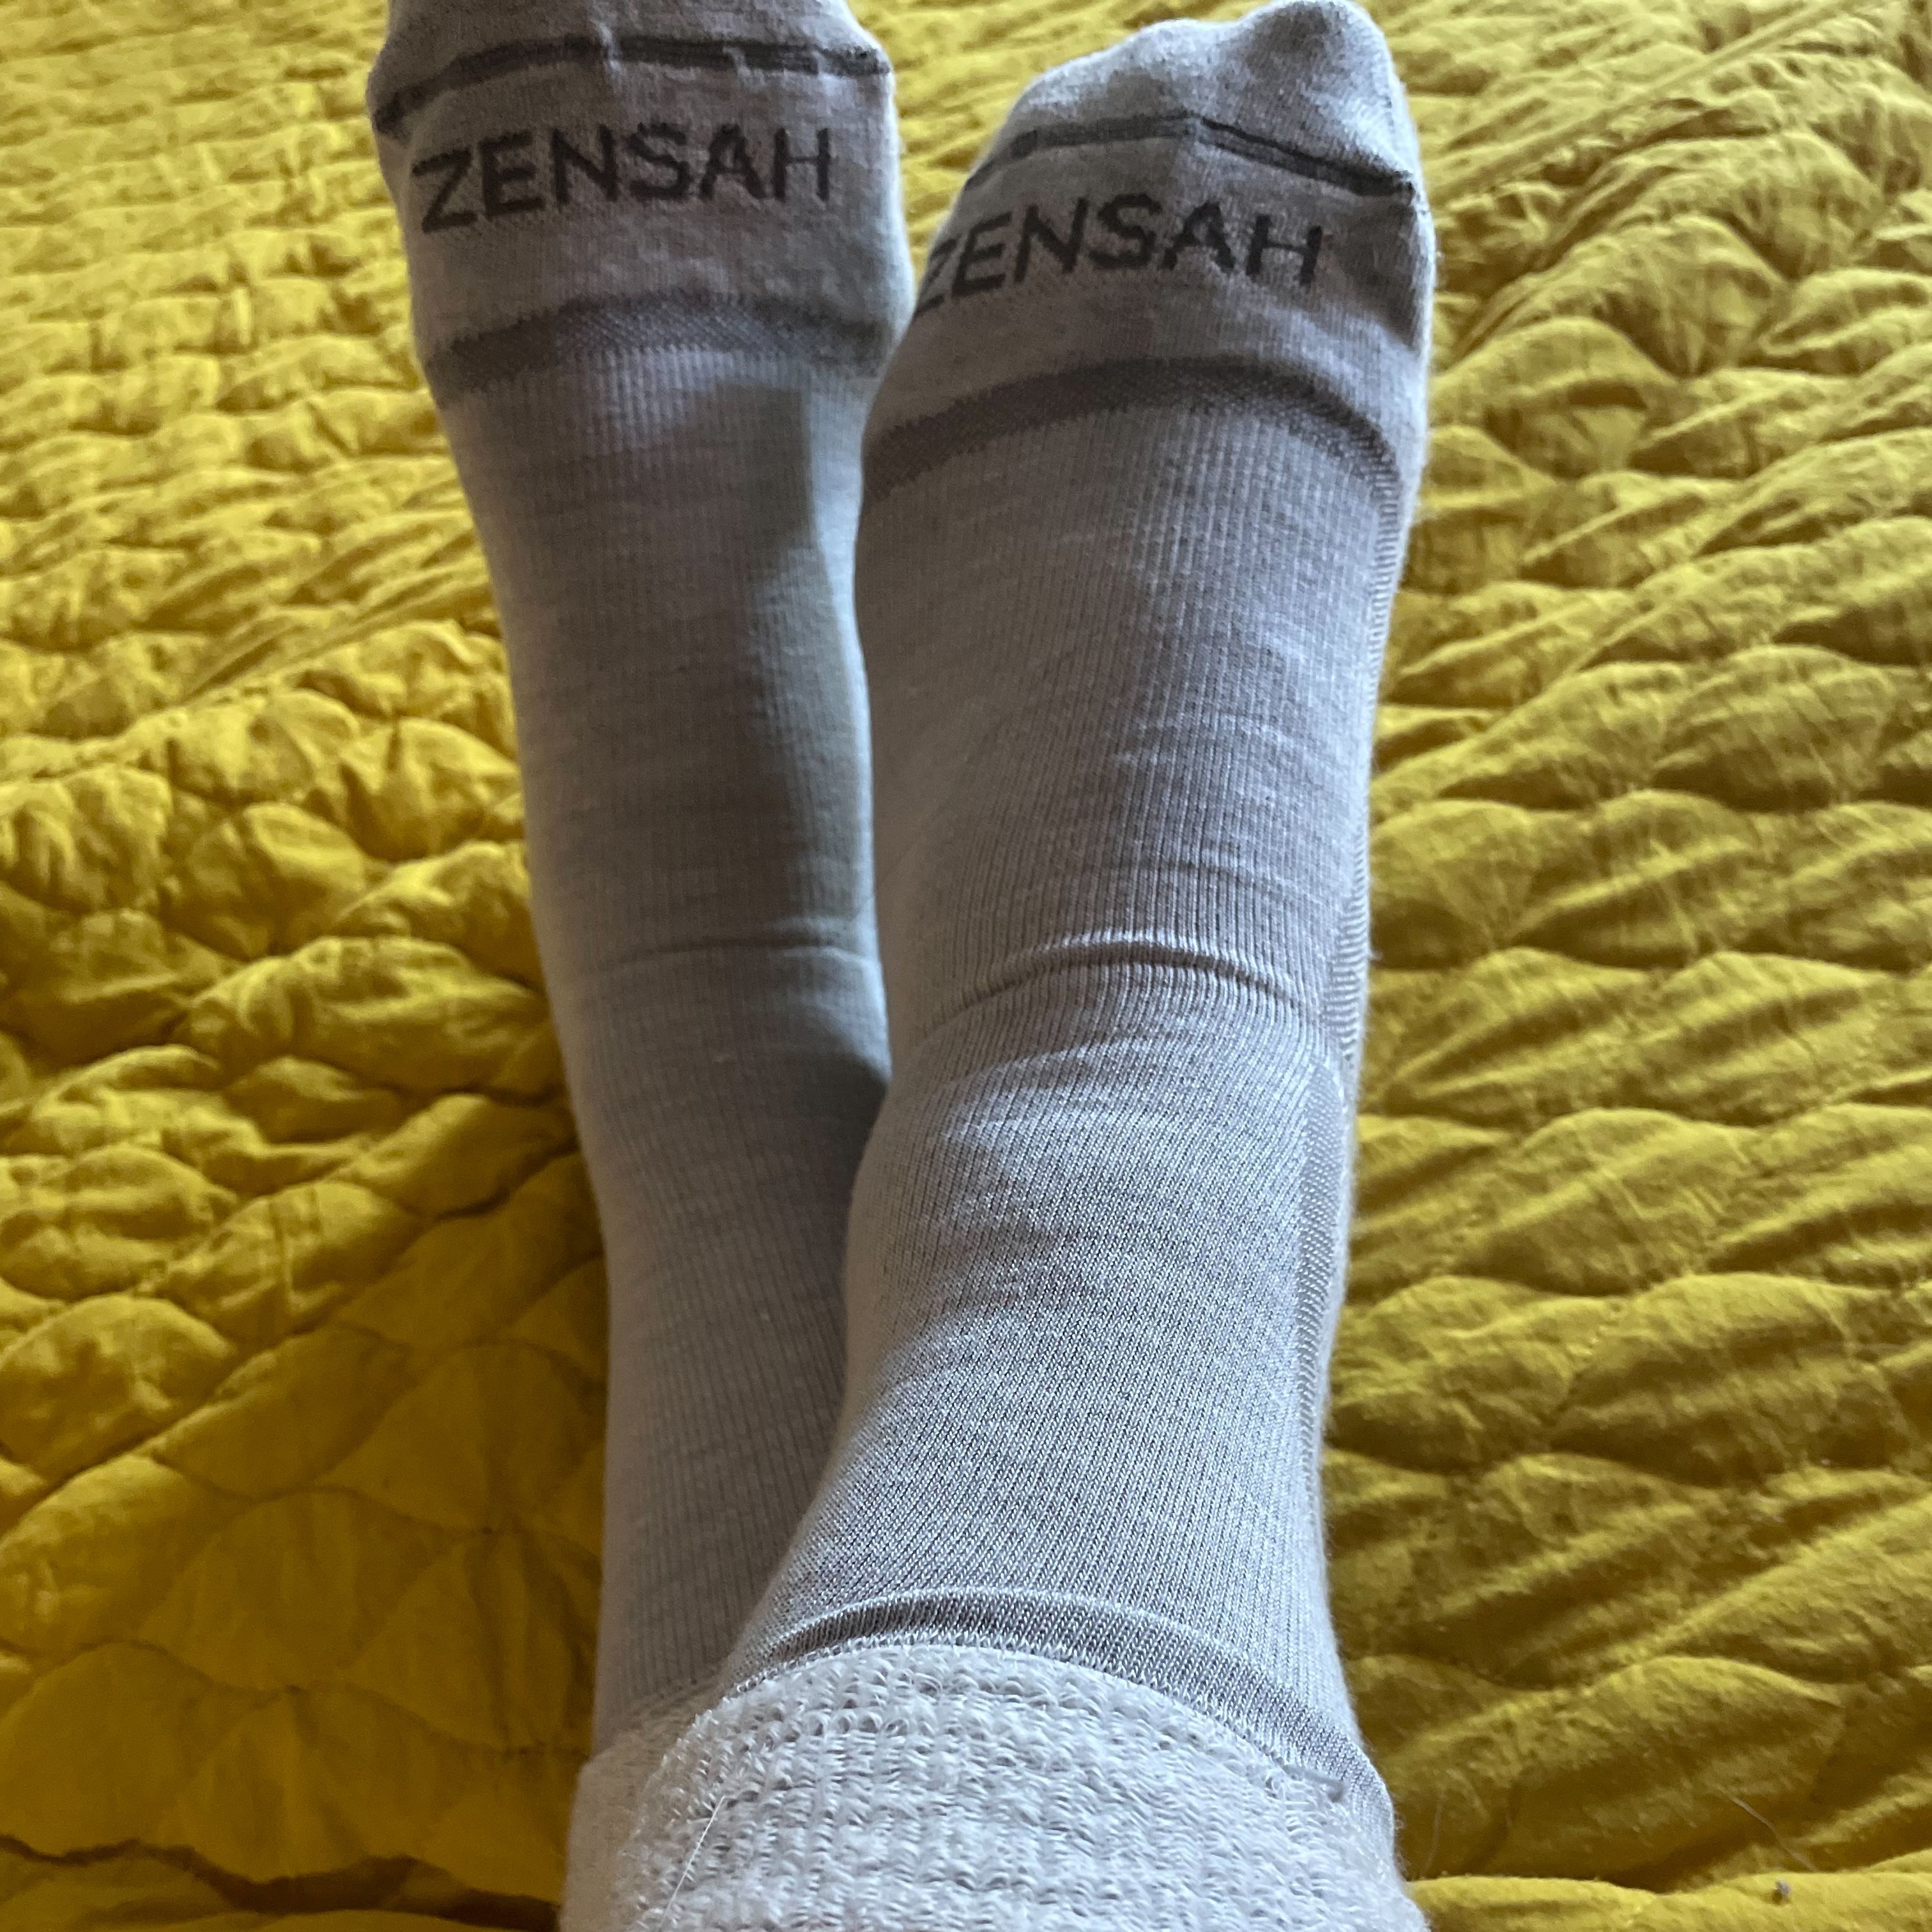 Zensah Compression Socks Review